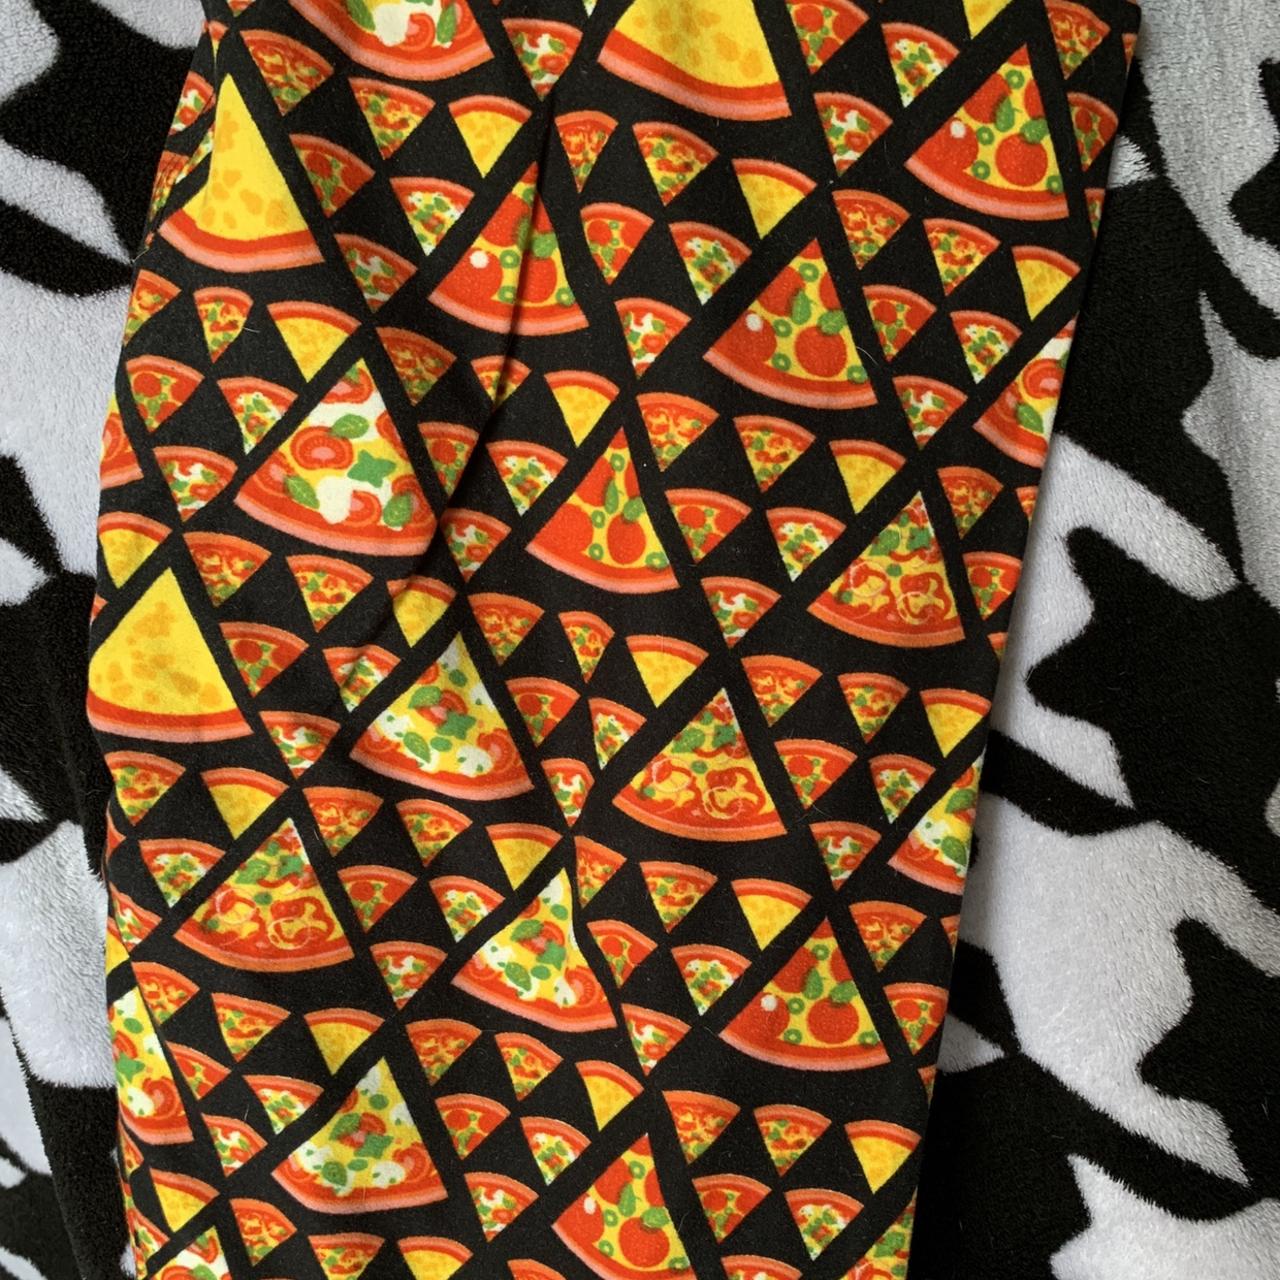 Lularoe pizza leggings size TC (tall and curvy) - Depop